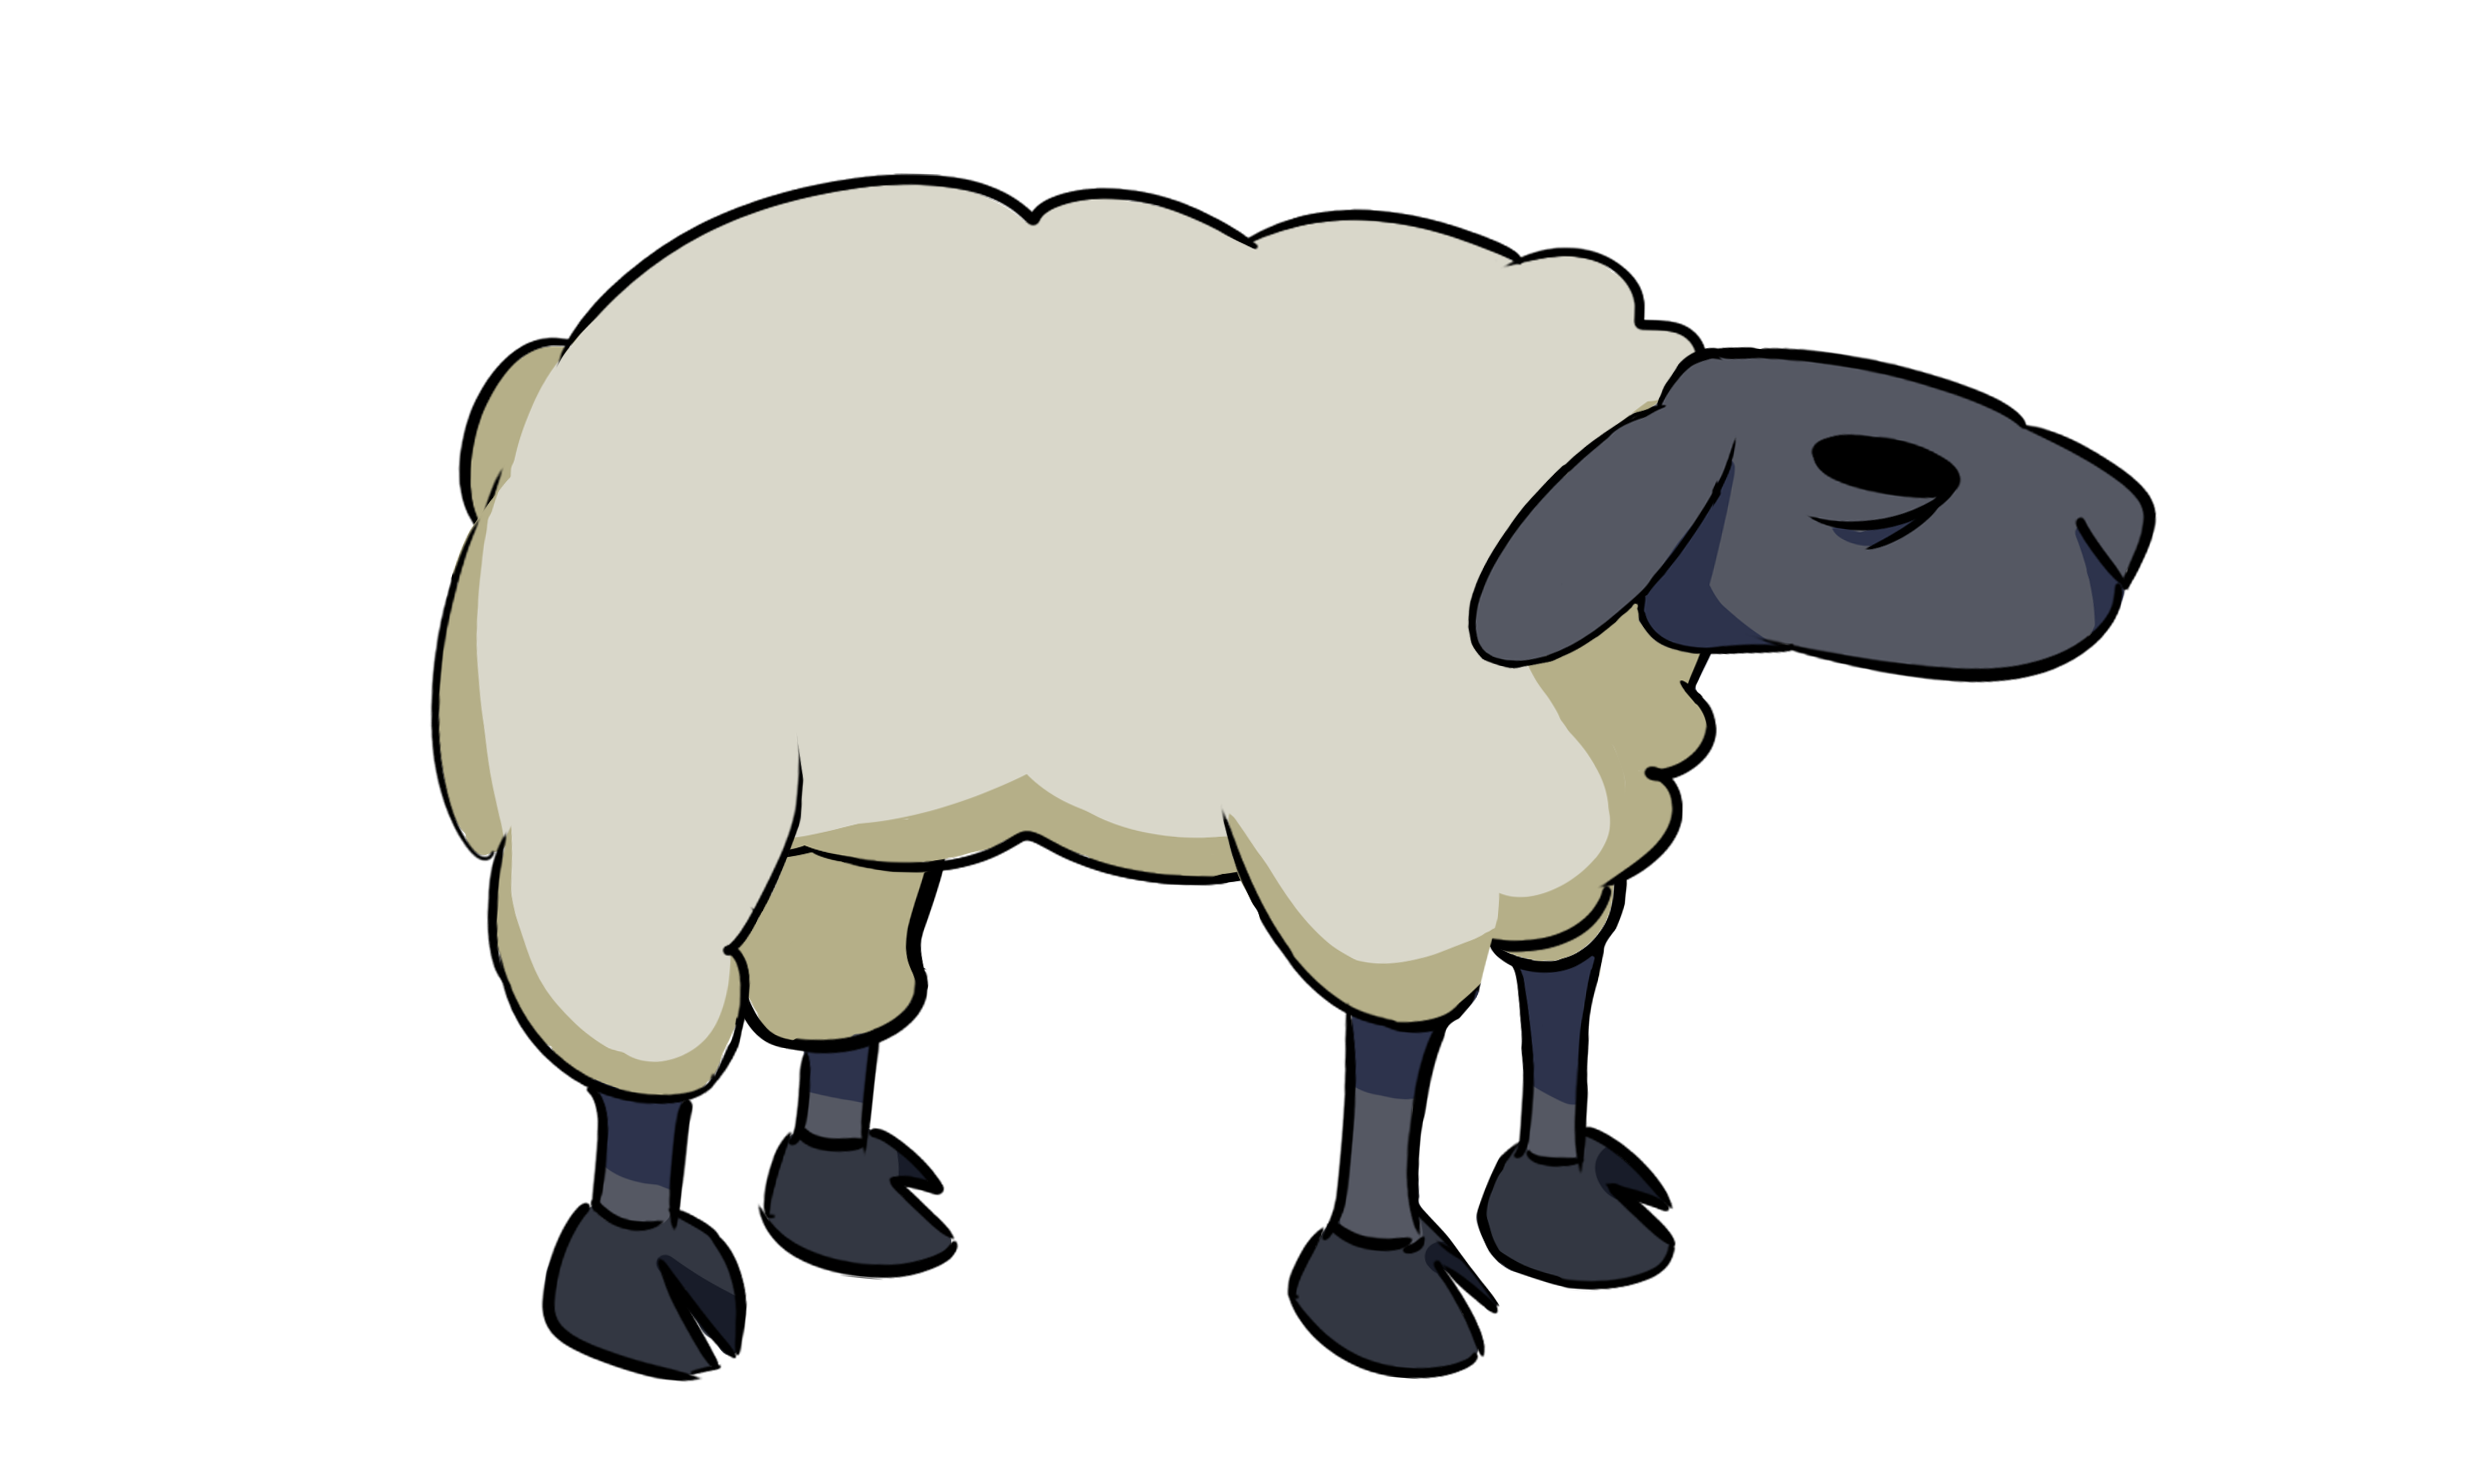 The sheep